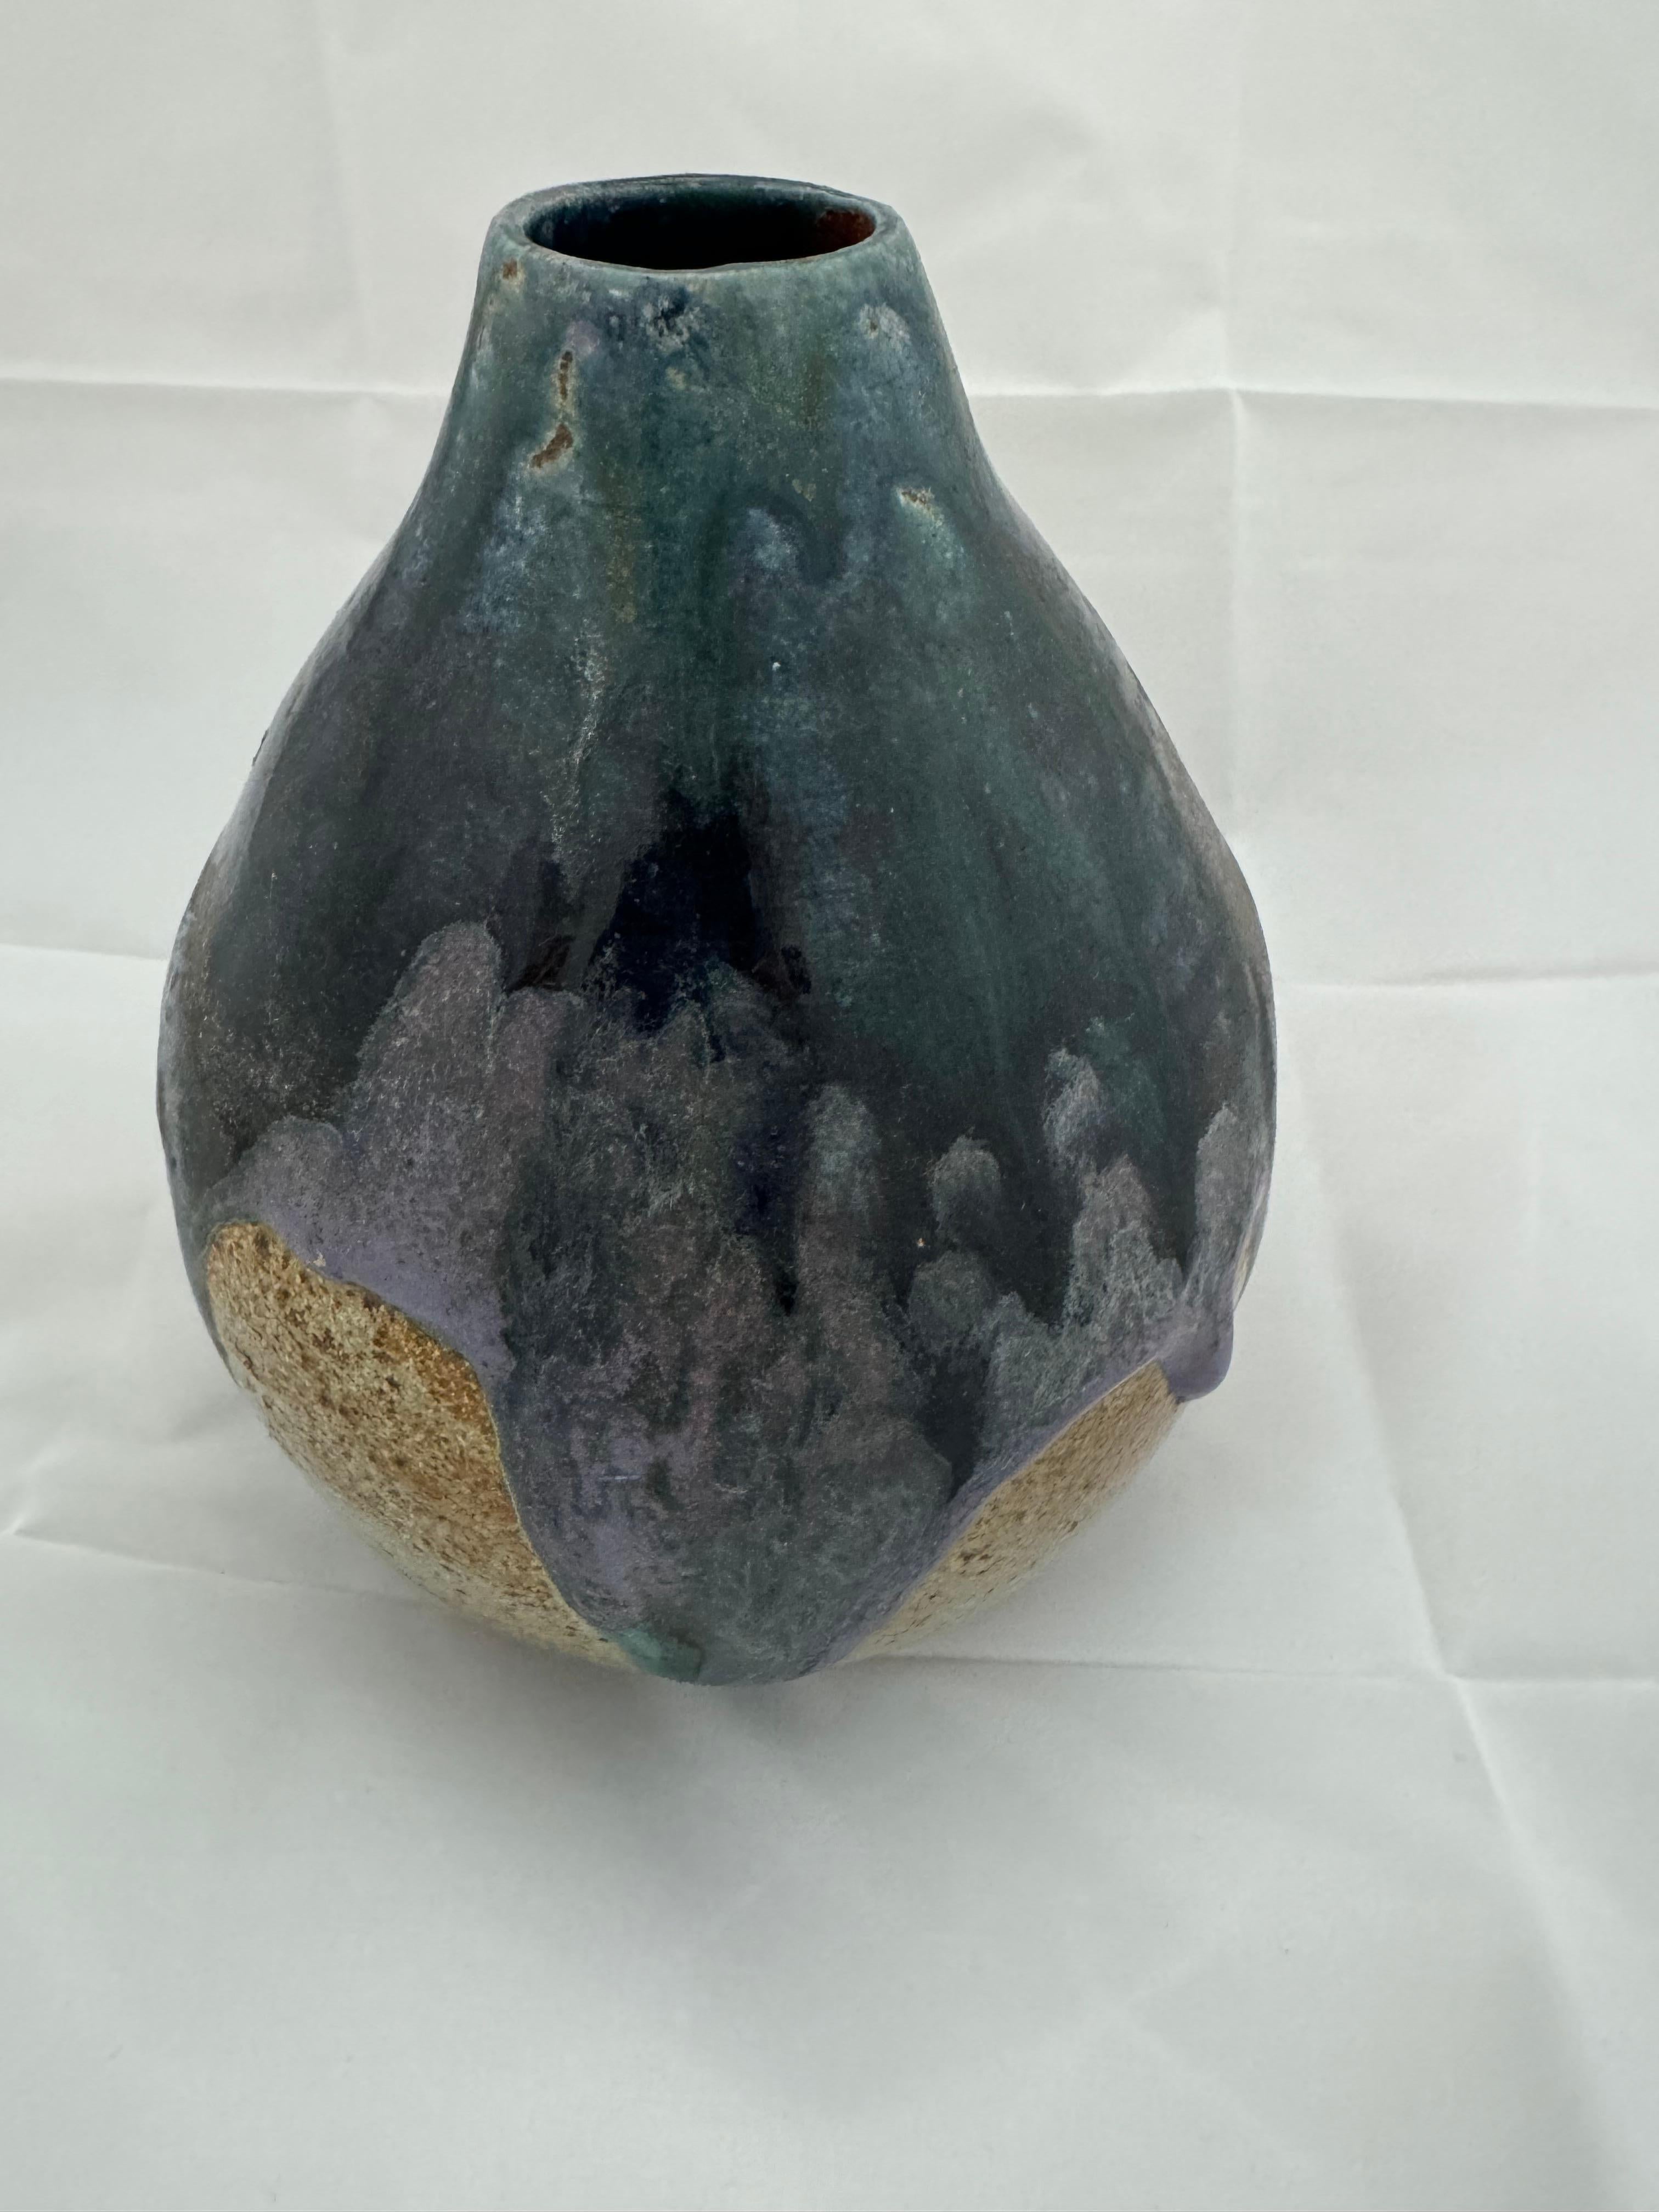 Great partially glazed studio pottery vessel